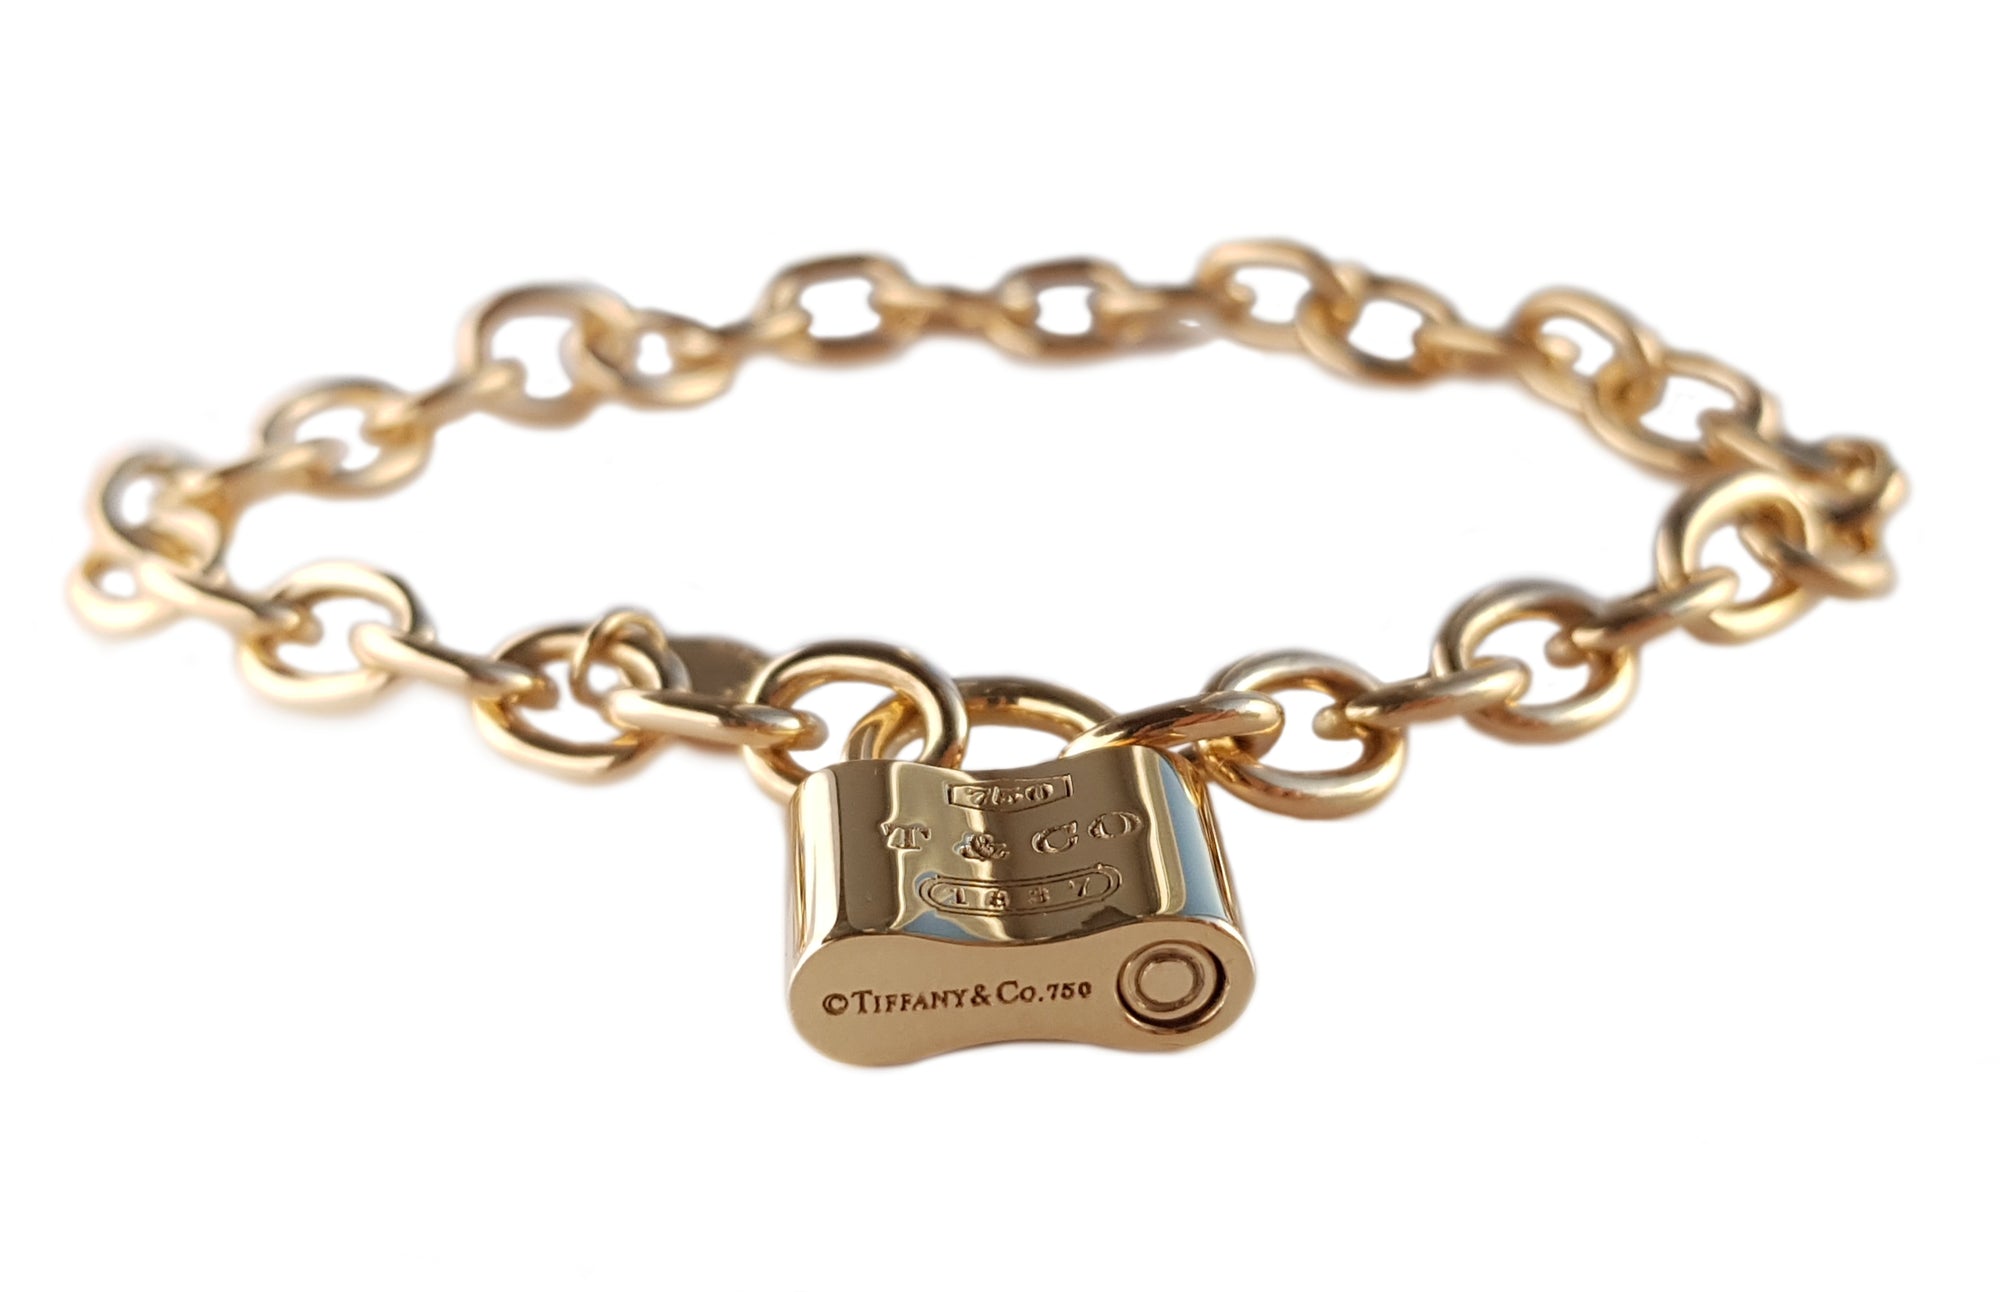 Tiffany & Co. 1837 Padlock Bracelet, 750, 7 inches